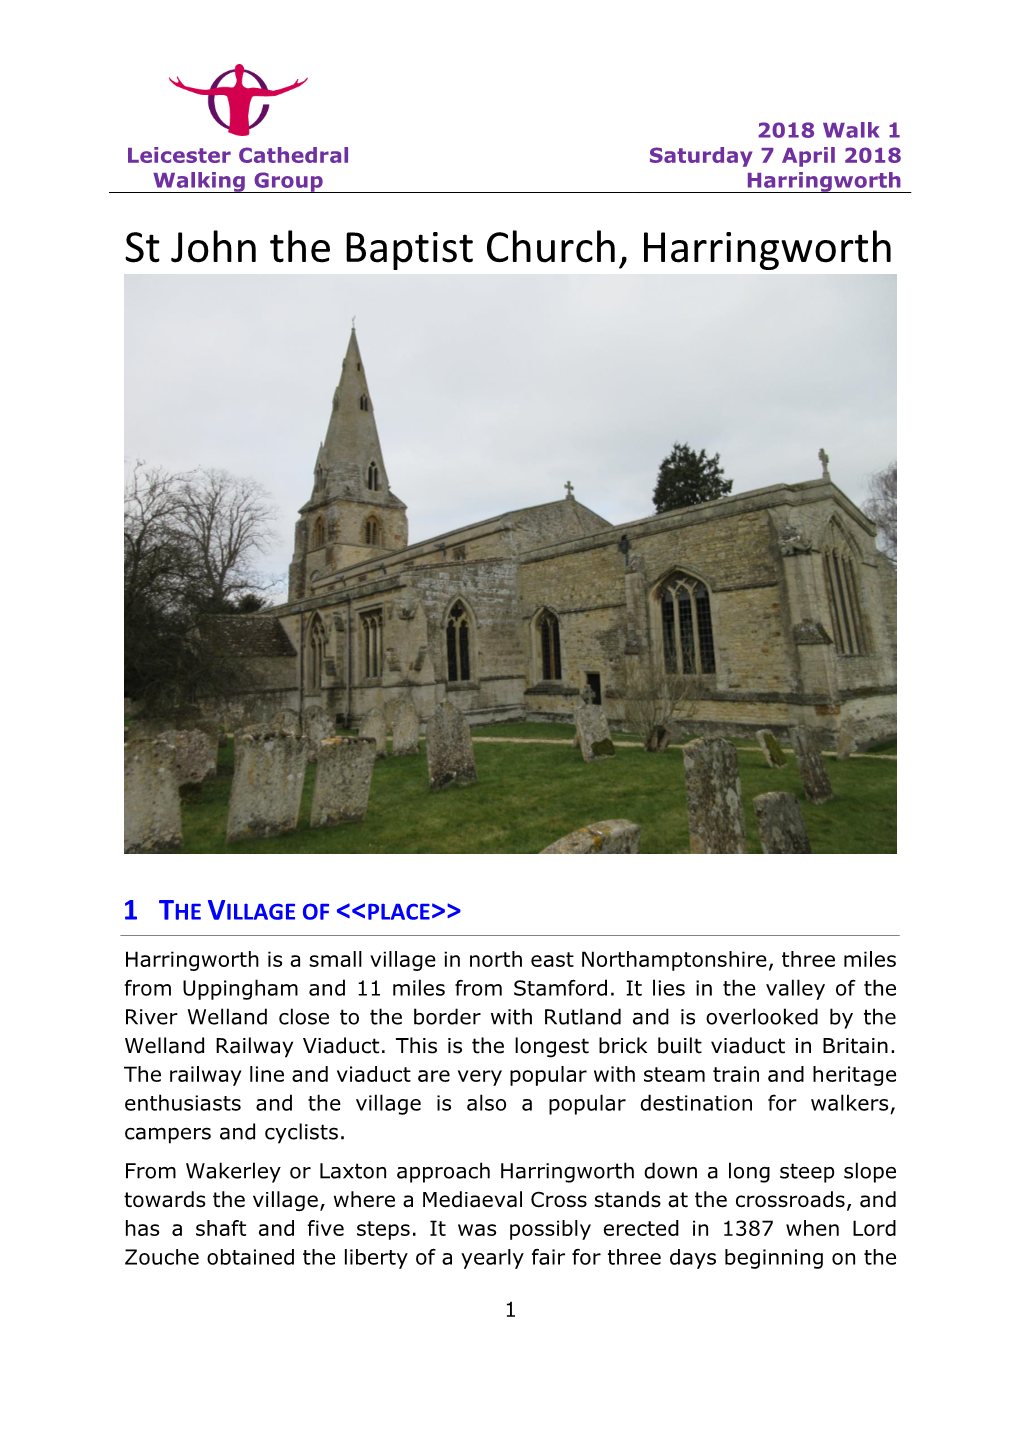 St John the Baptist Church, Harringworth